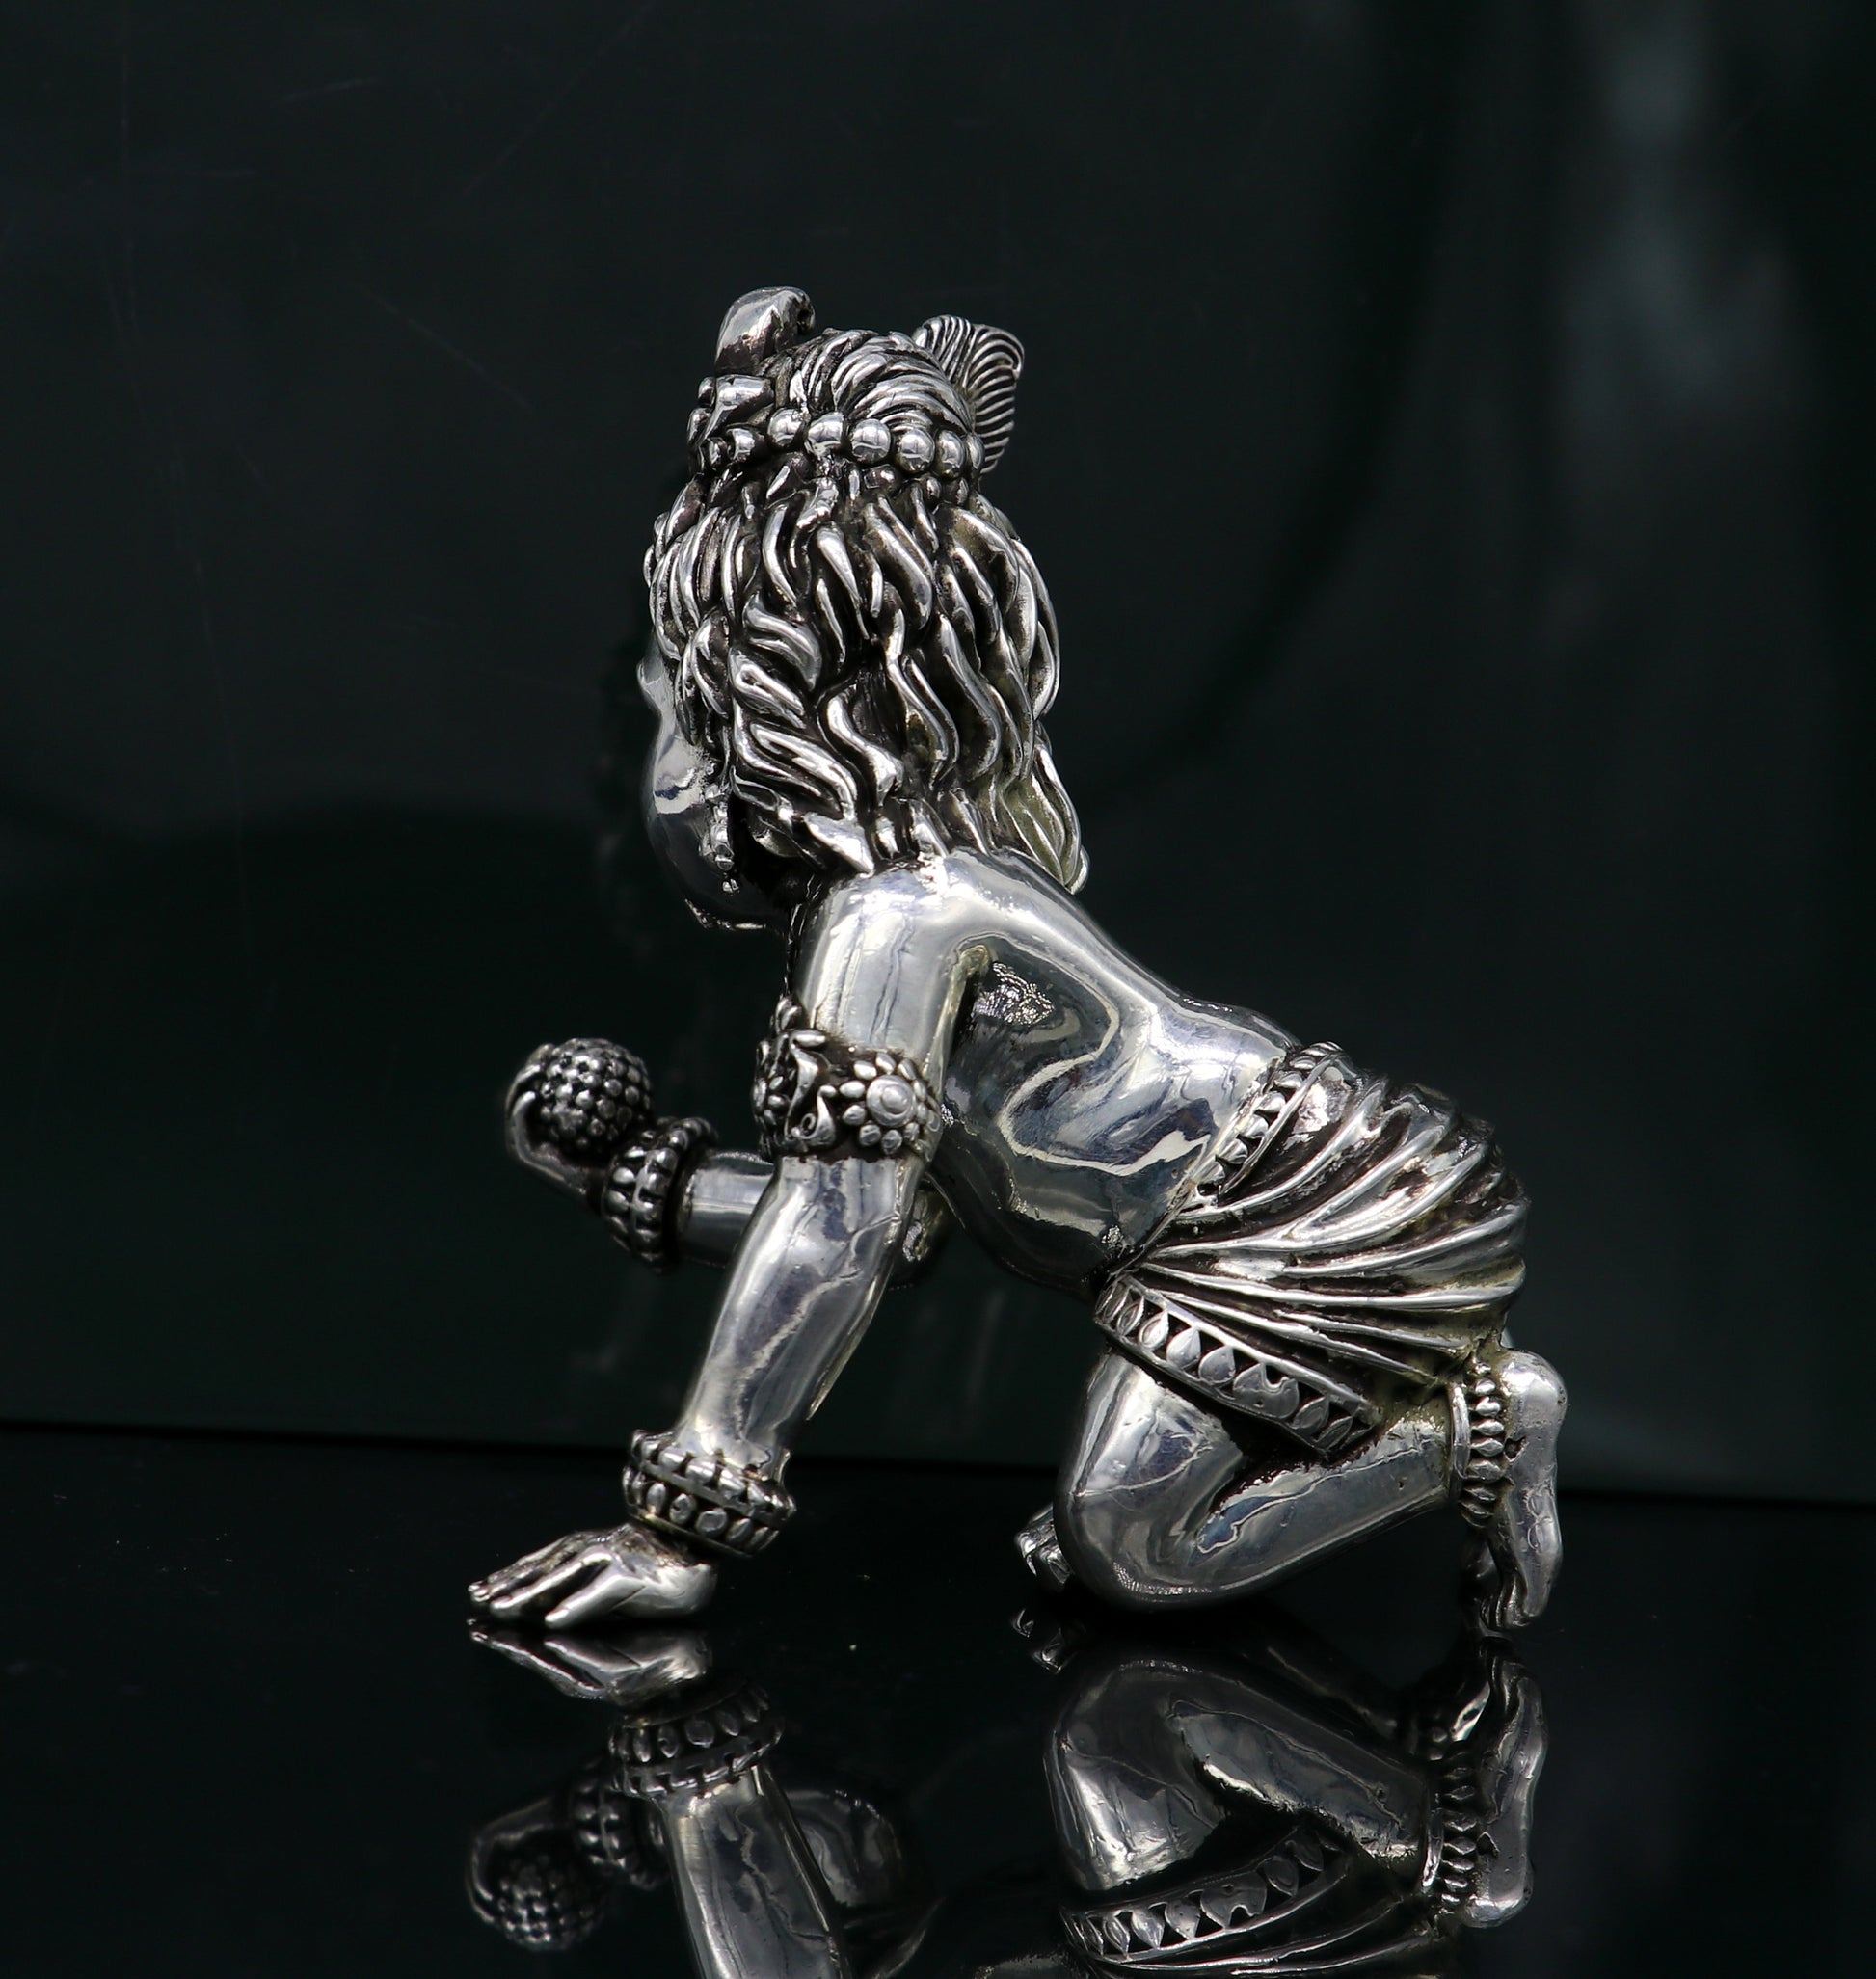 925 Sterling silver customized Idol Krishna Bal Gopal statue figurine, laddu gopal sculpture home temple utensil, silver article su210 - TRIBAL ORNAMENTS